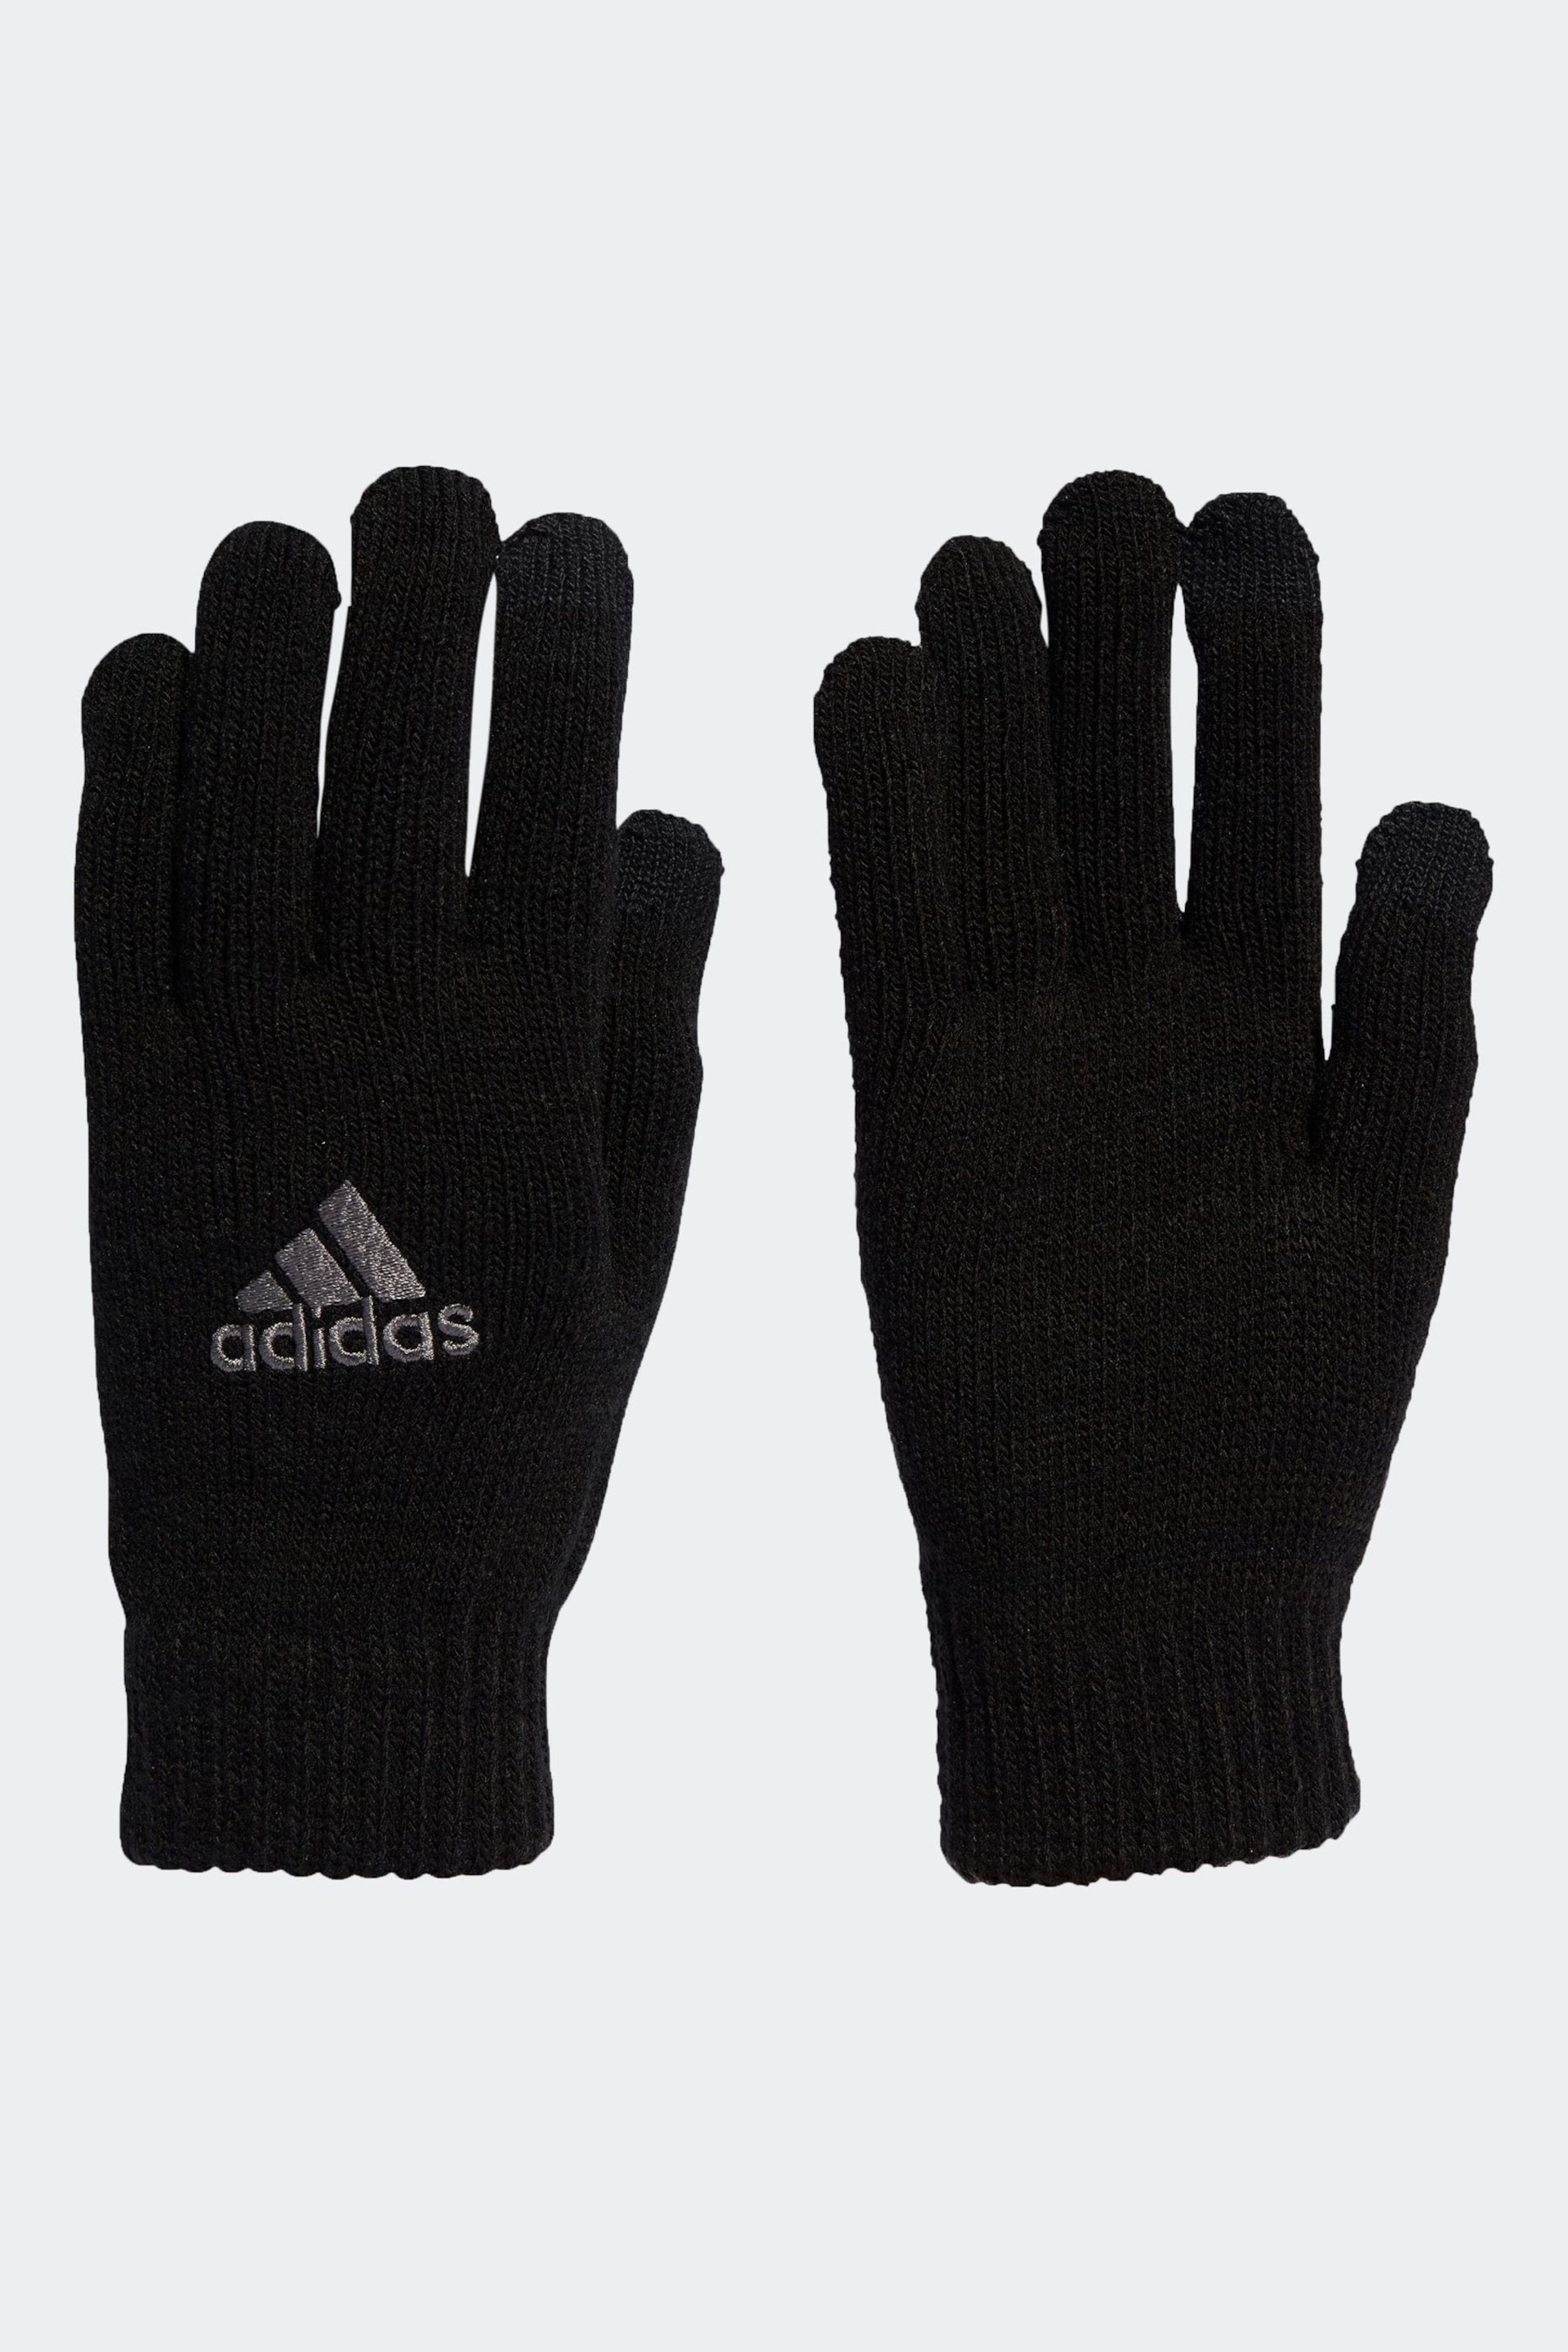 adidas Black Essentials Gloves - Image 1 of 4